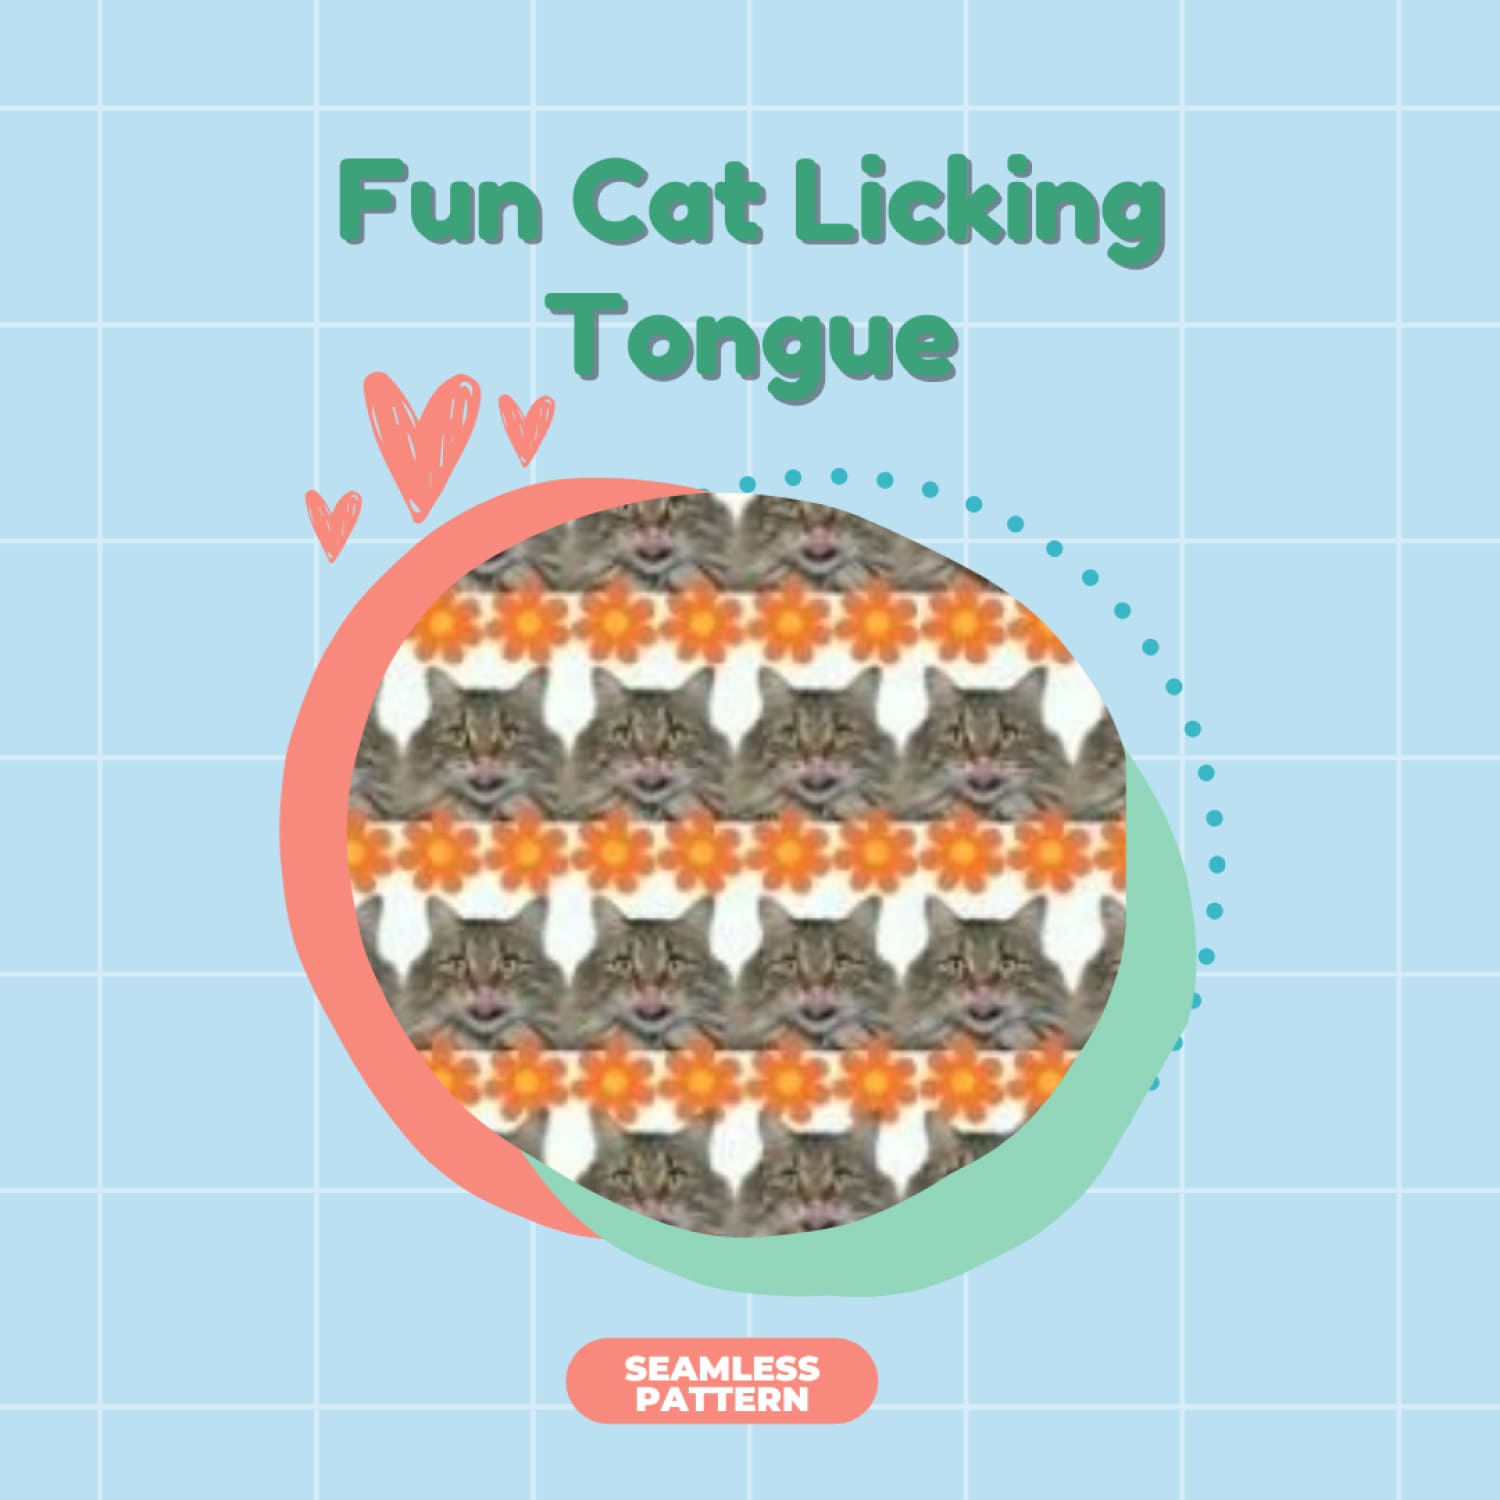 Fun Cat Licking Tongue Seamless Pattern.